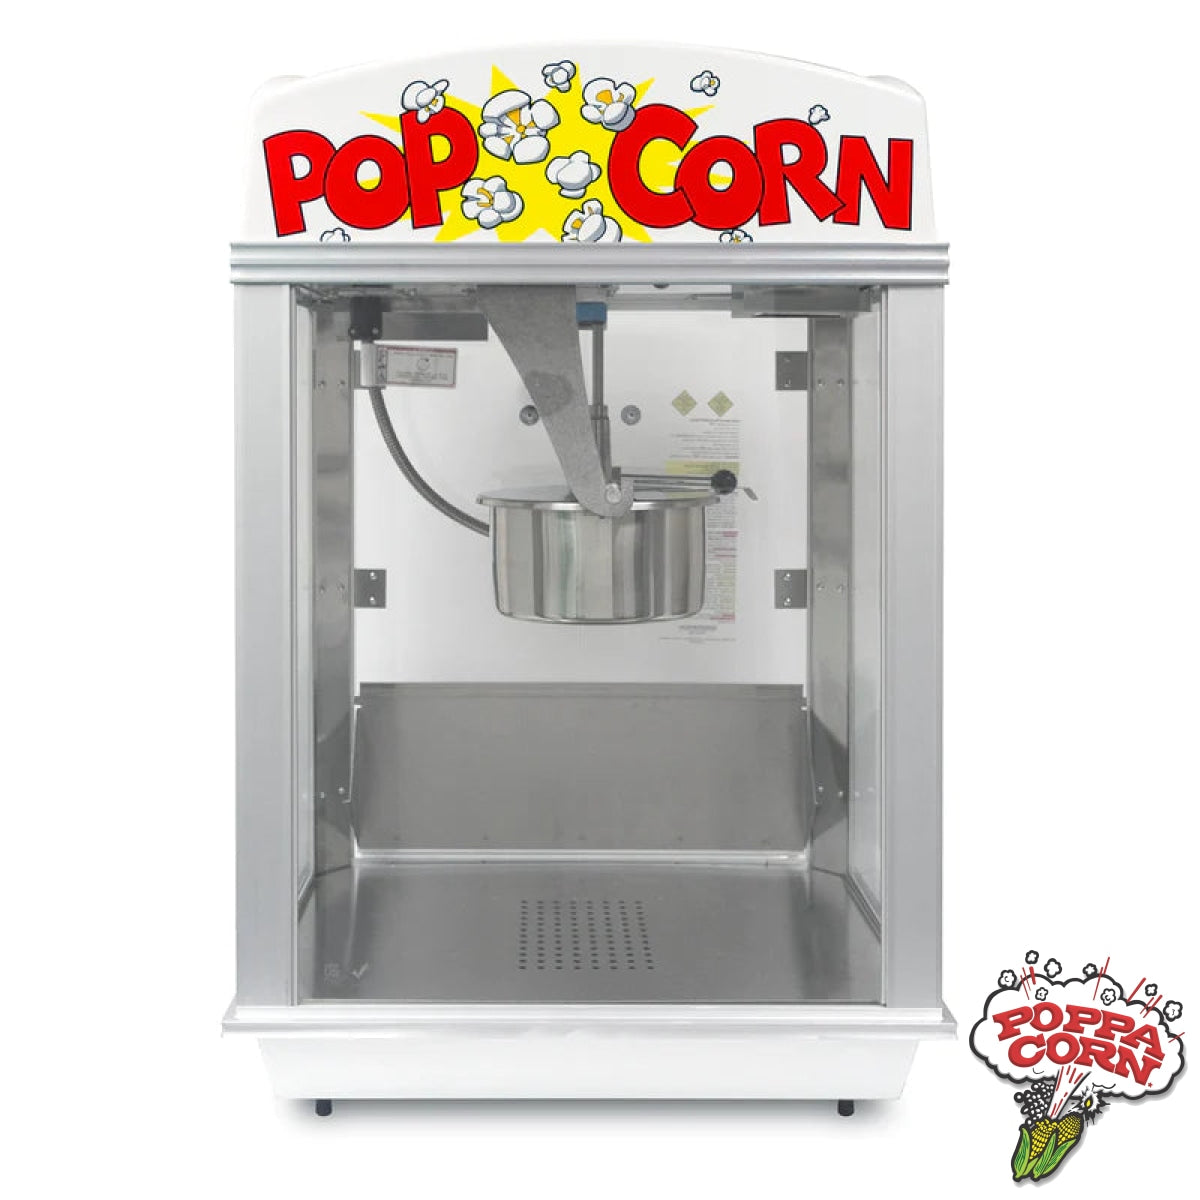 Whiz Bang Popcorn Machine - White Dome with Lighted Sign - GM2003 - Poppa Corn Corp